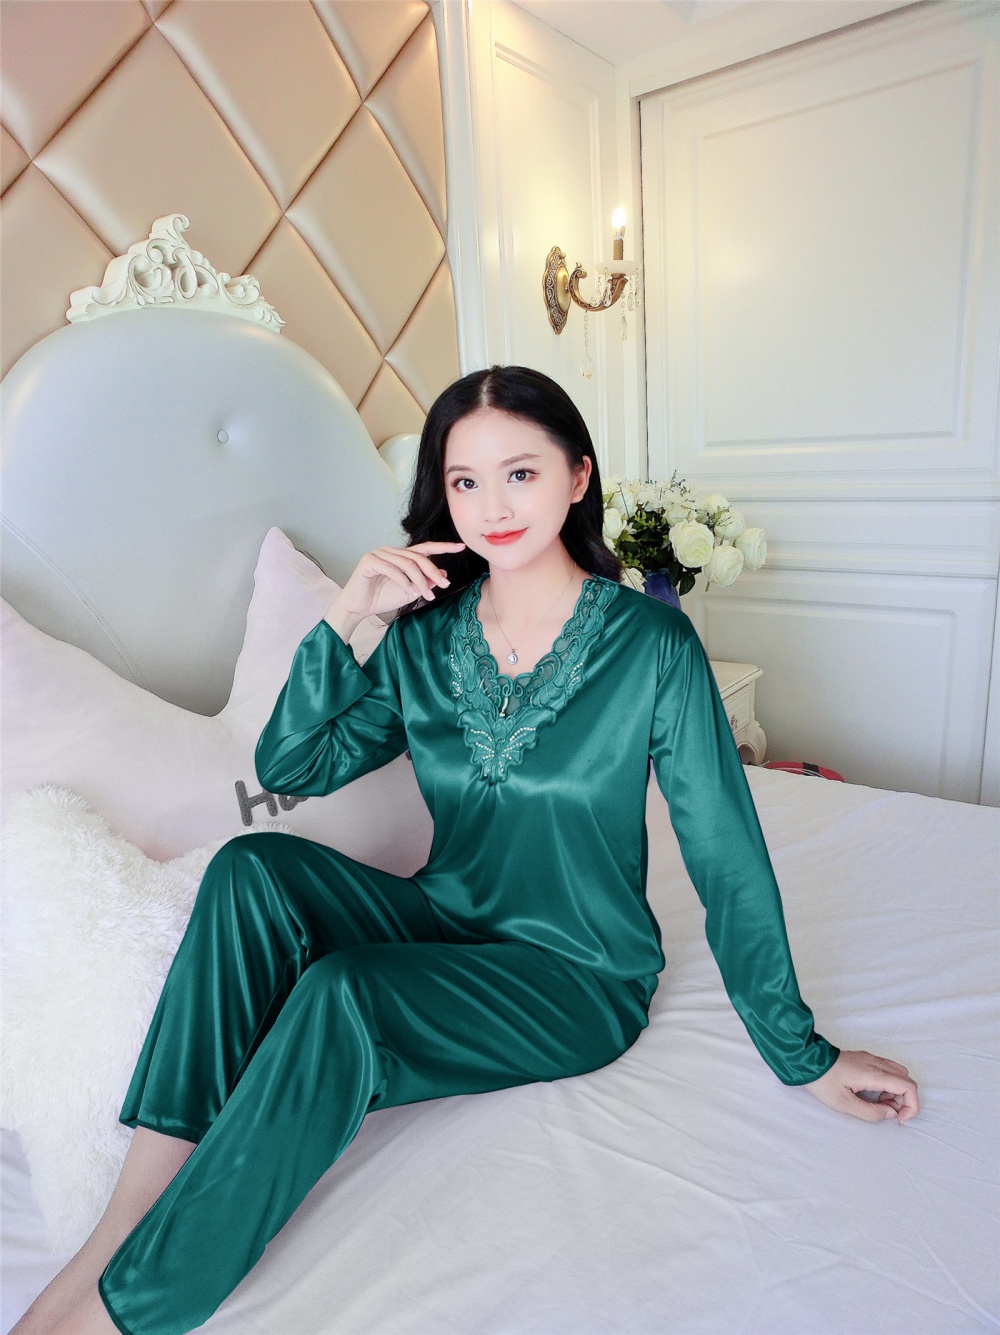 Summer homewear thin V-neck silk pajamas a set for women